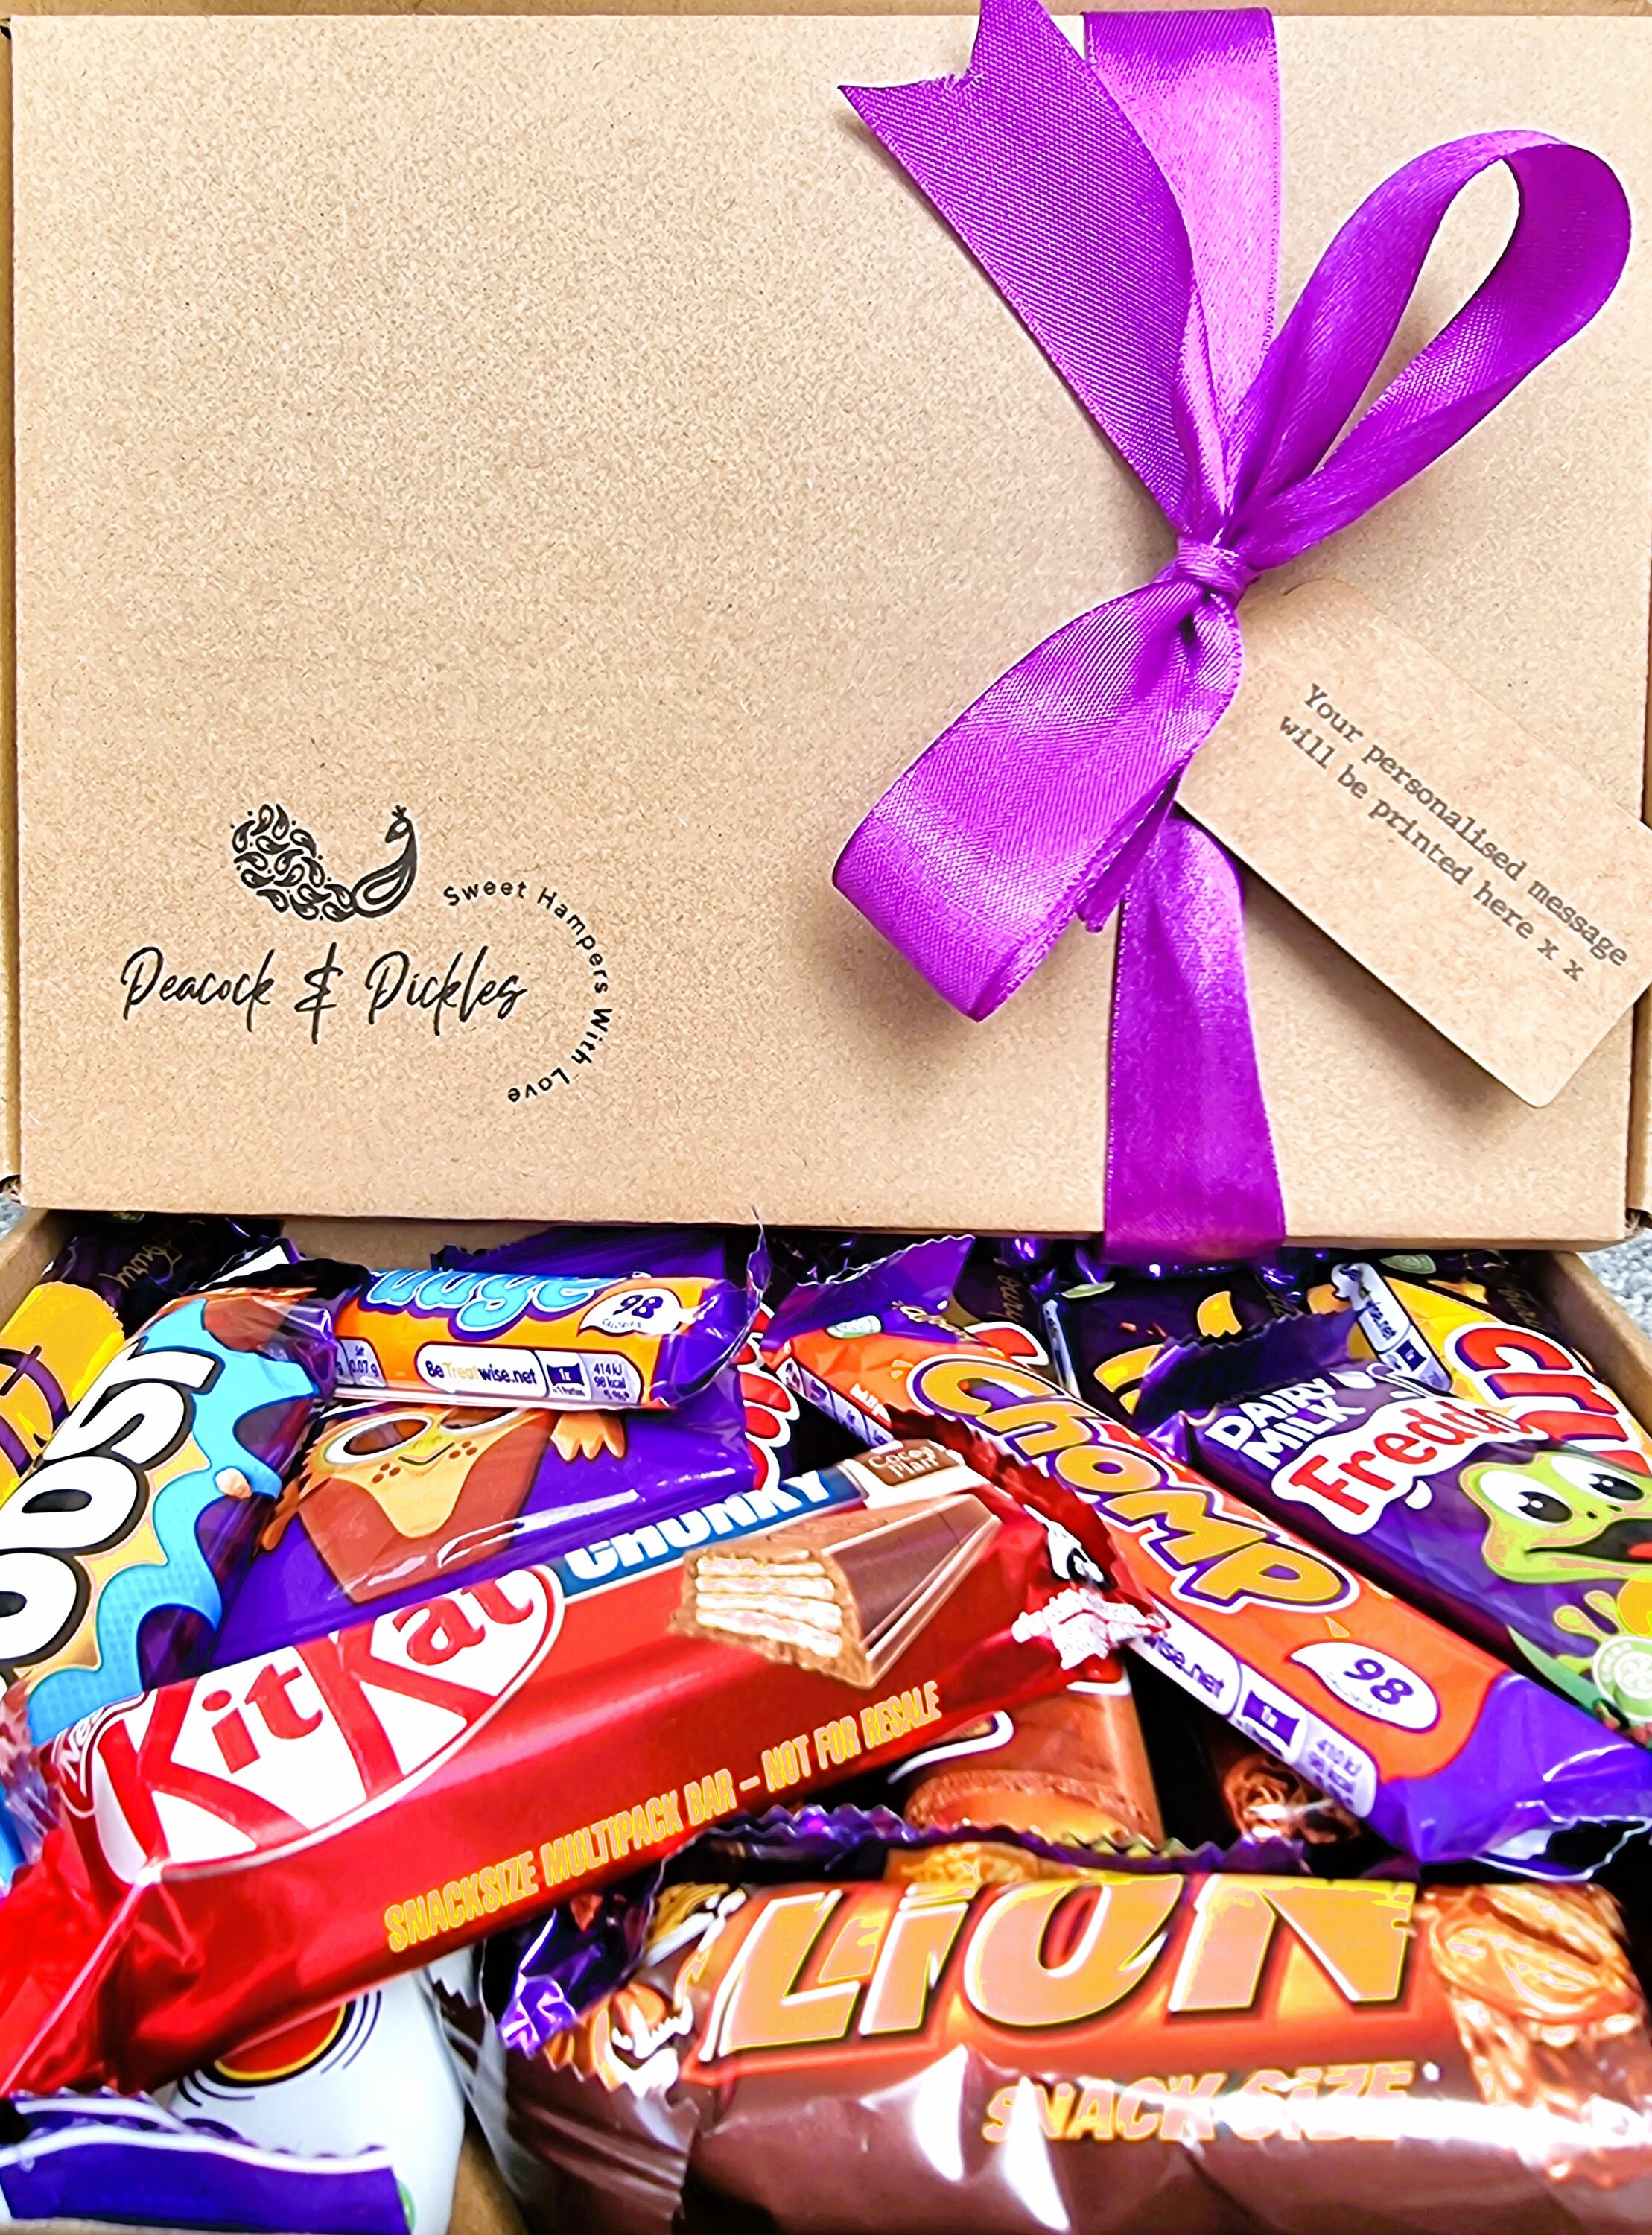 Les Bonbons de Mandy - Chocolat & Caramel - KitKat Japonais Choco C